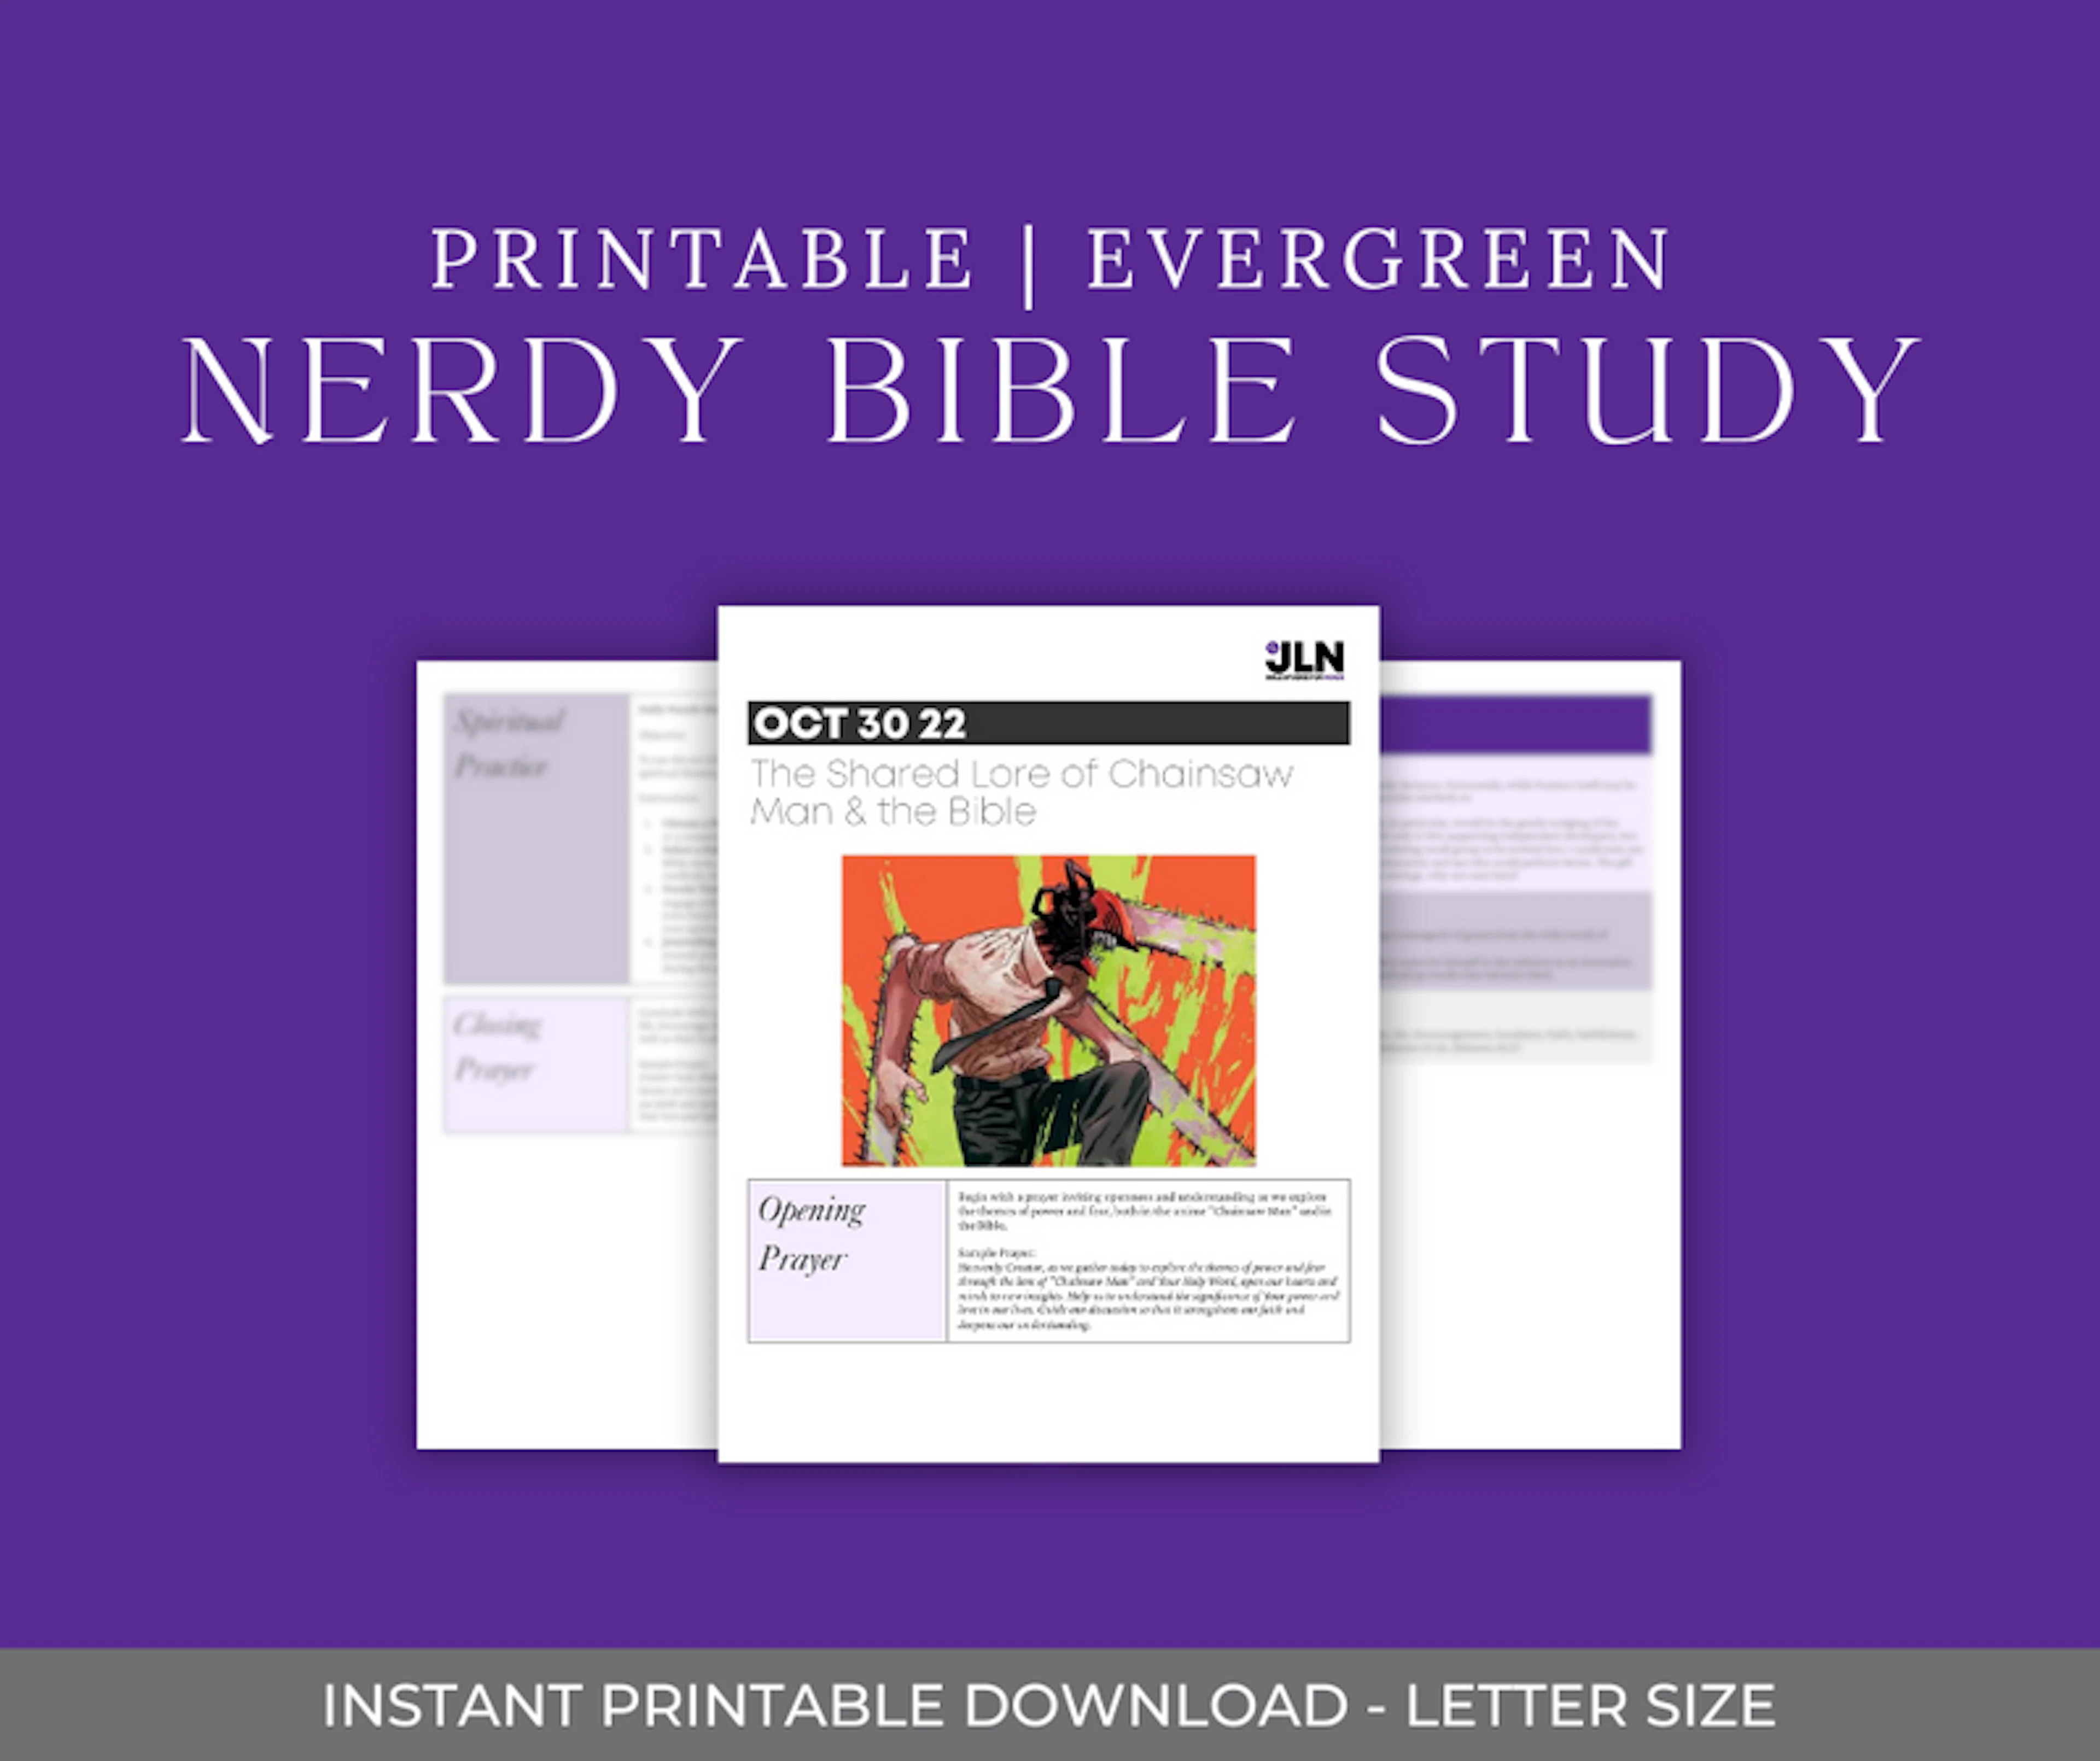 Nerdy Bible Study - October 30, 2022